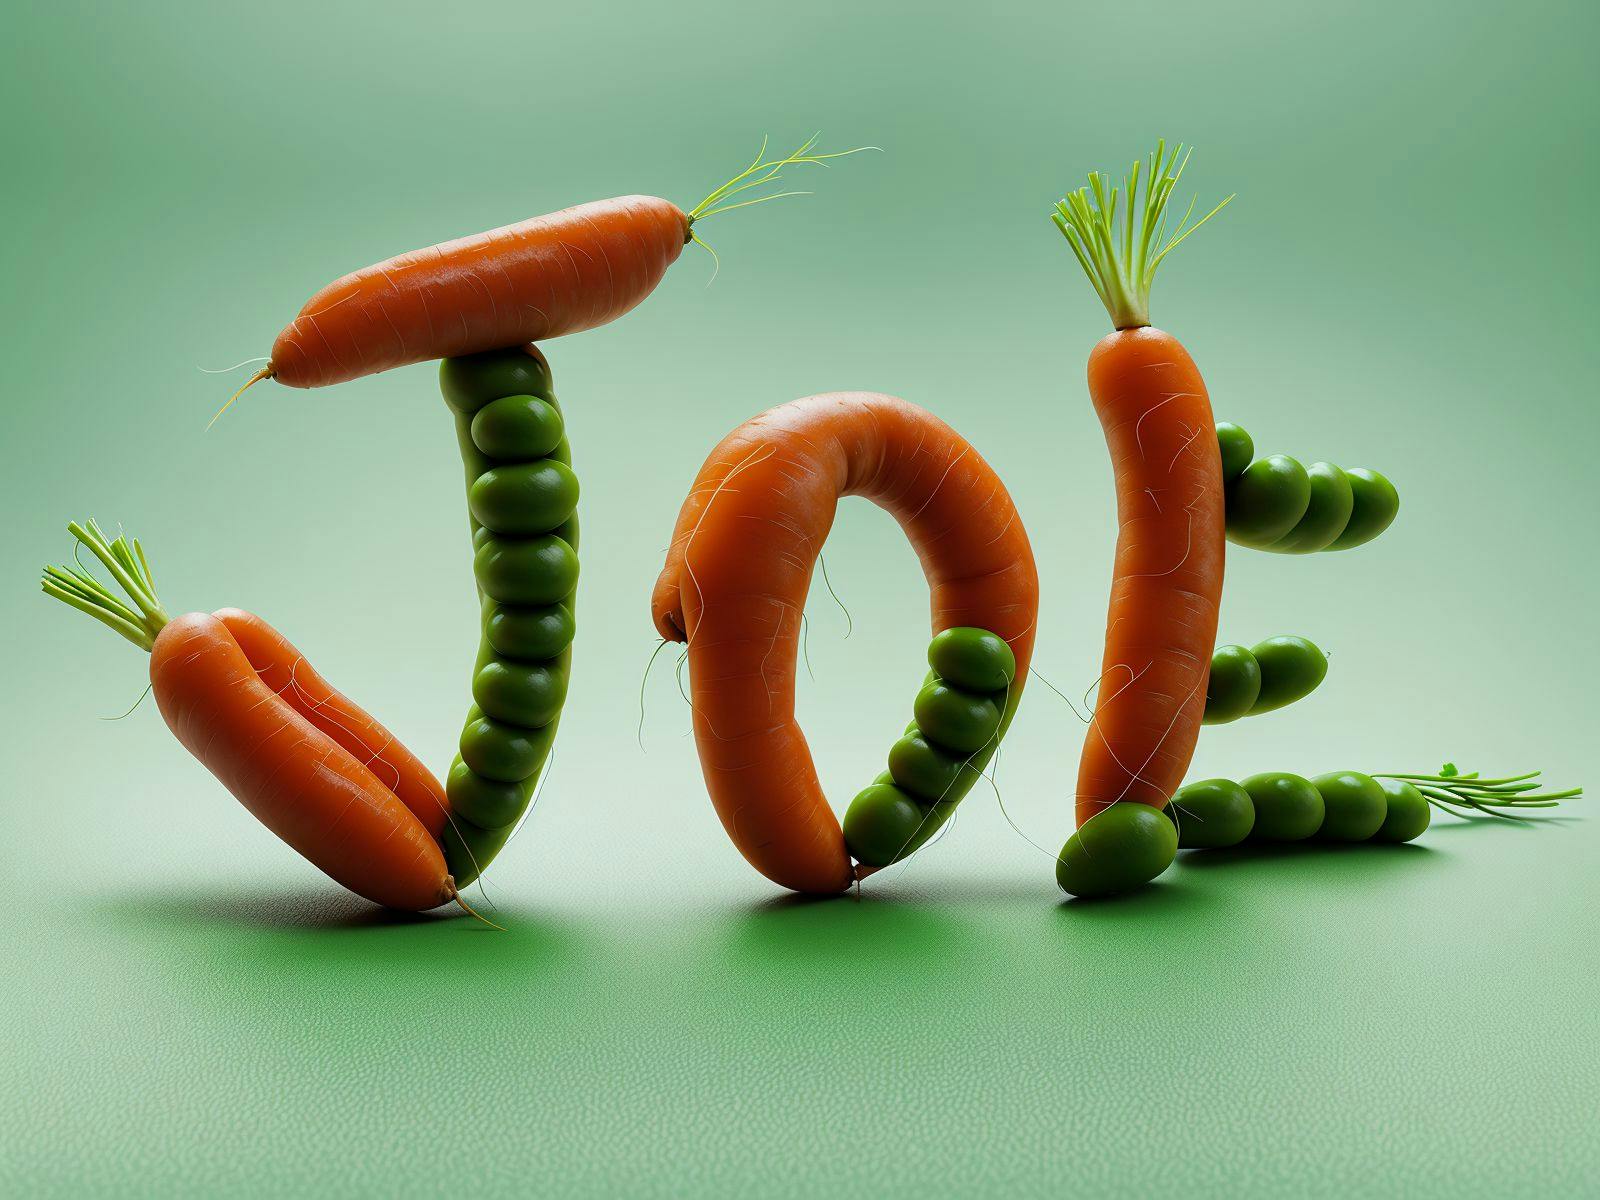 Joe Carrots and Peas